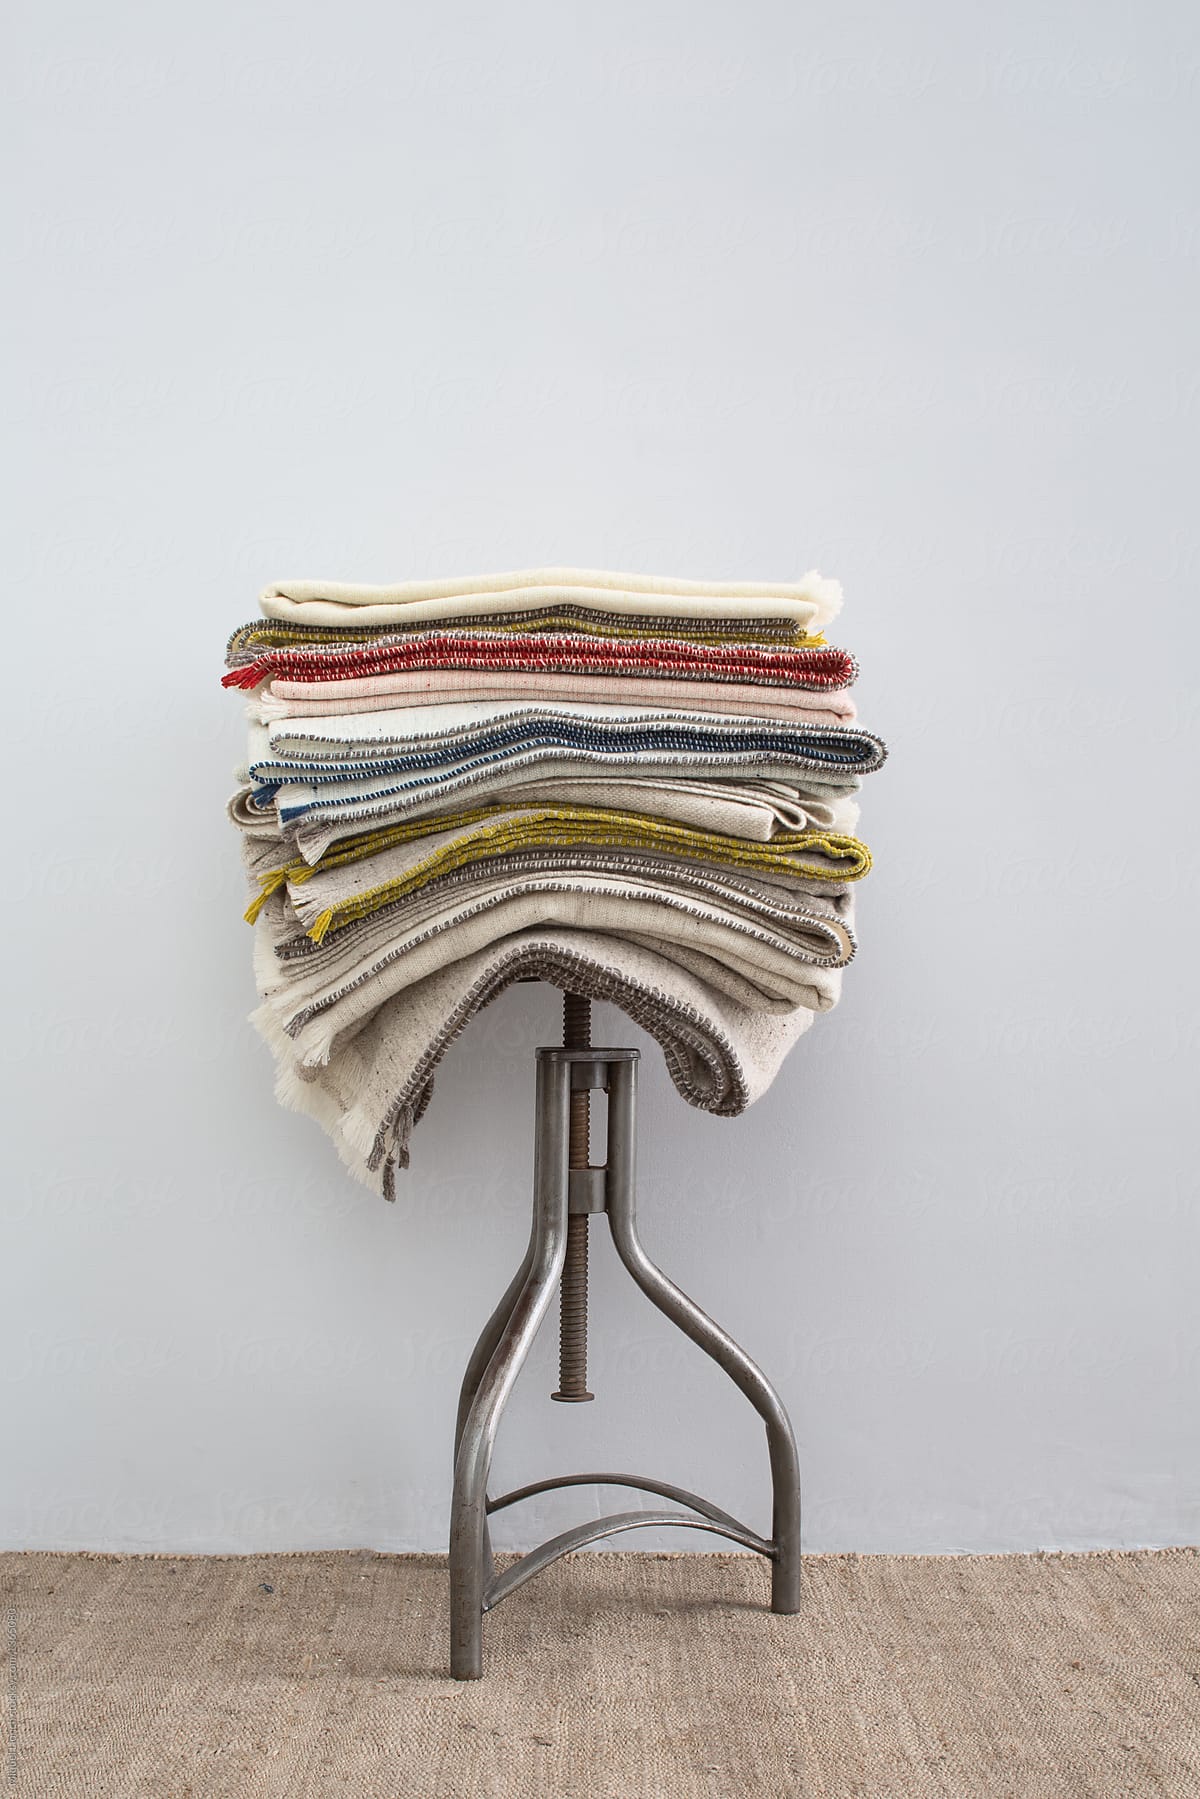 Wool blankets stack on vintage stool